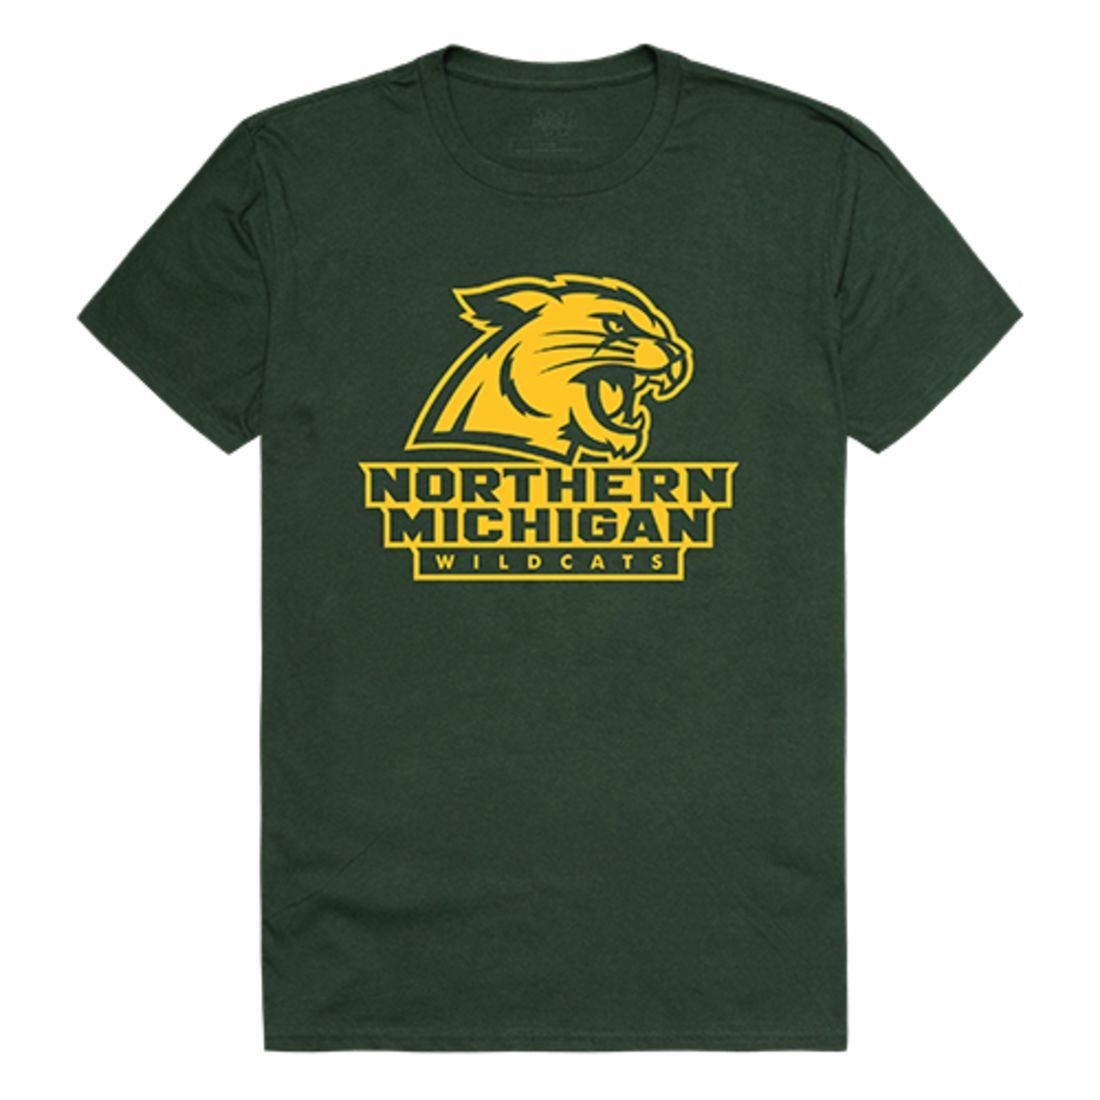 NMU Northern Michigan University Wildcats Freshman Tee T-Shirt Forest-Campus-Wardrobe